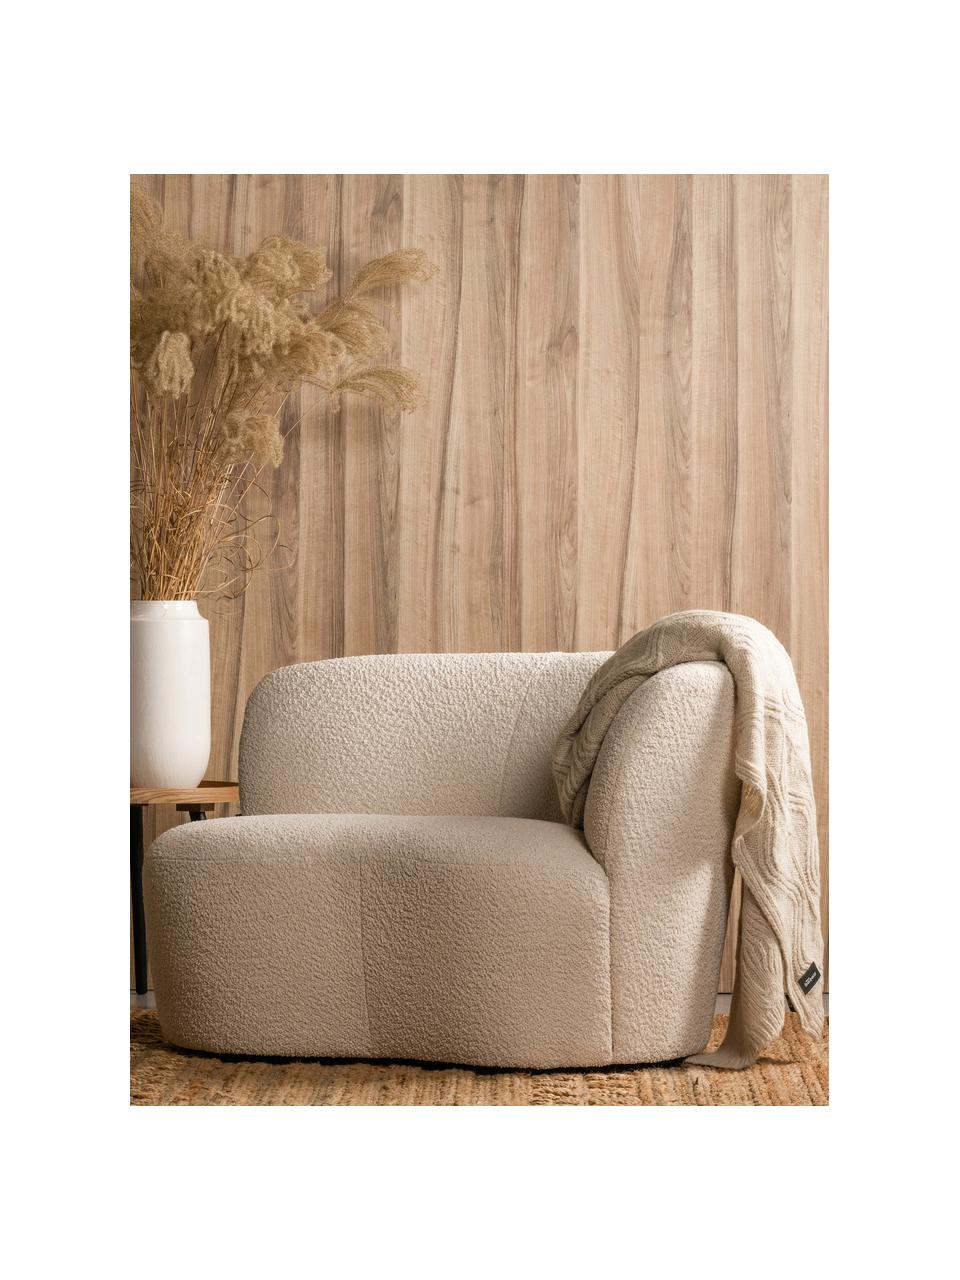 Grand fauteuil tissu bouclé beige Sibylla, En tissu bouclé beige, larg. 112 x prof. 80 cm